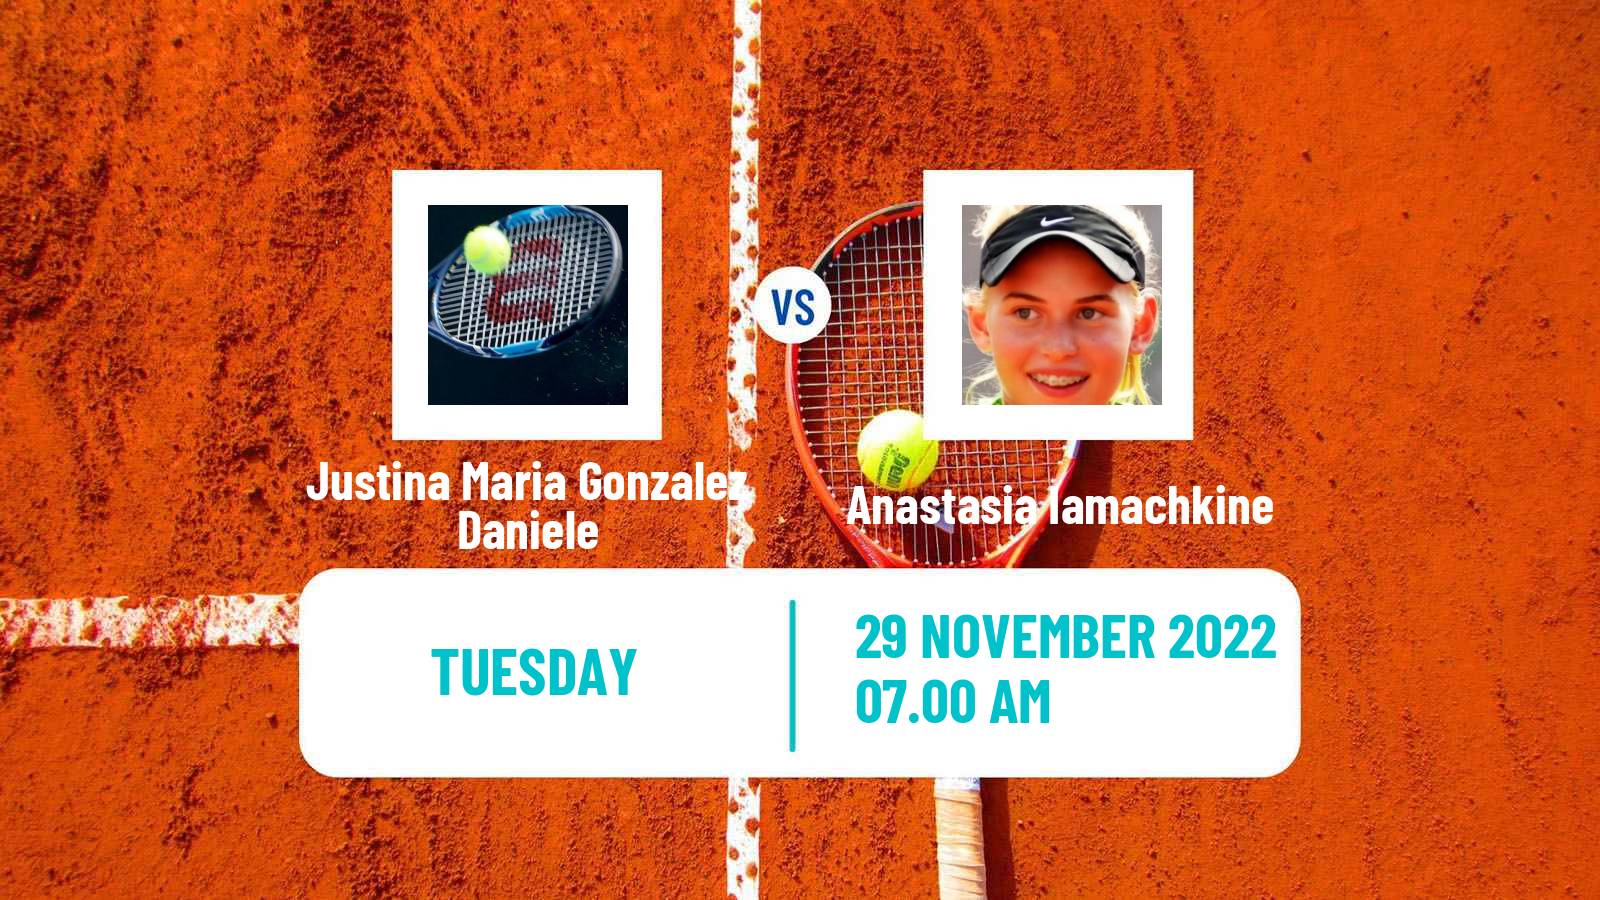 Tennis ITF Tournaments Justina Maria Gonzalez Daniele - Anastasia Iamachkine